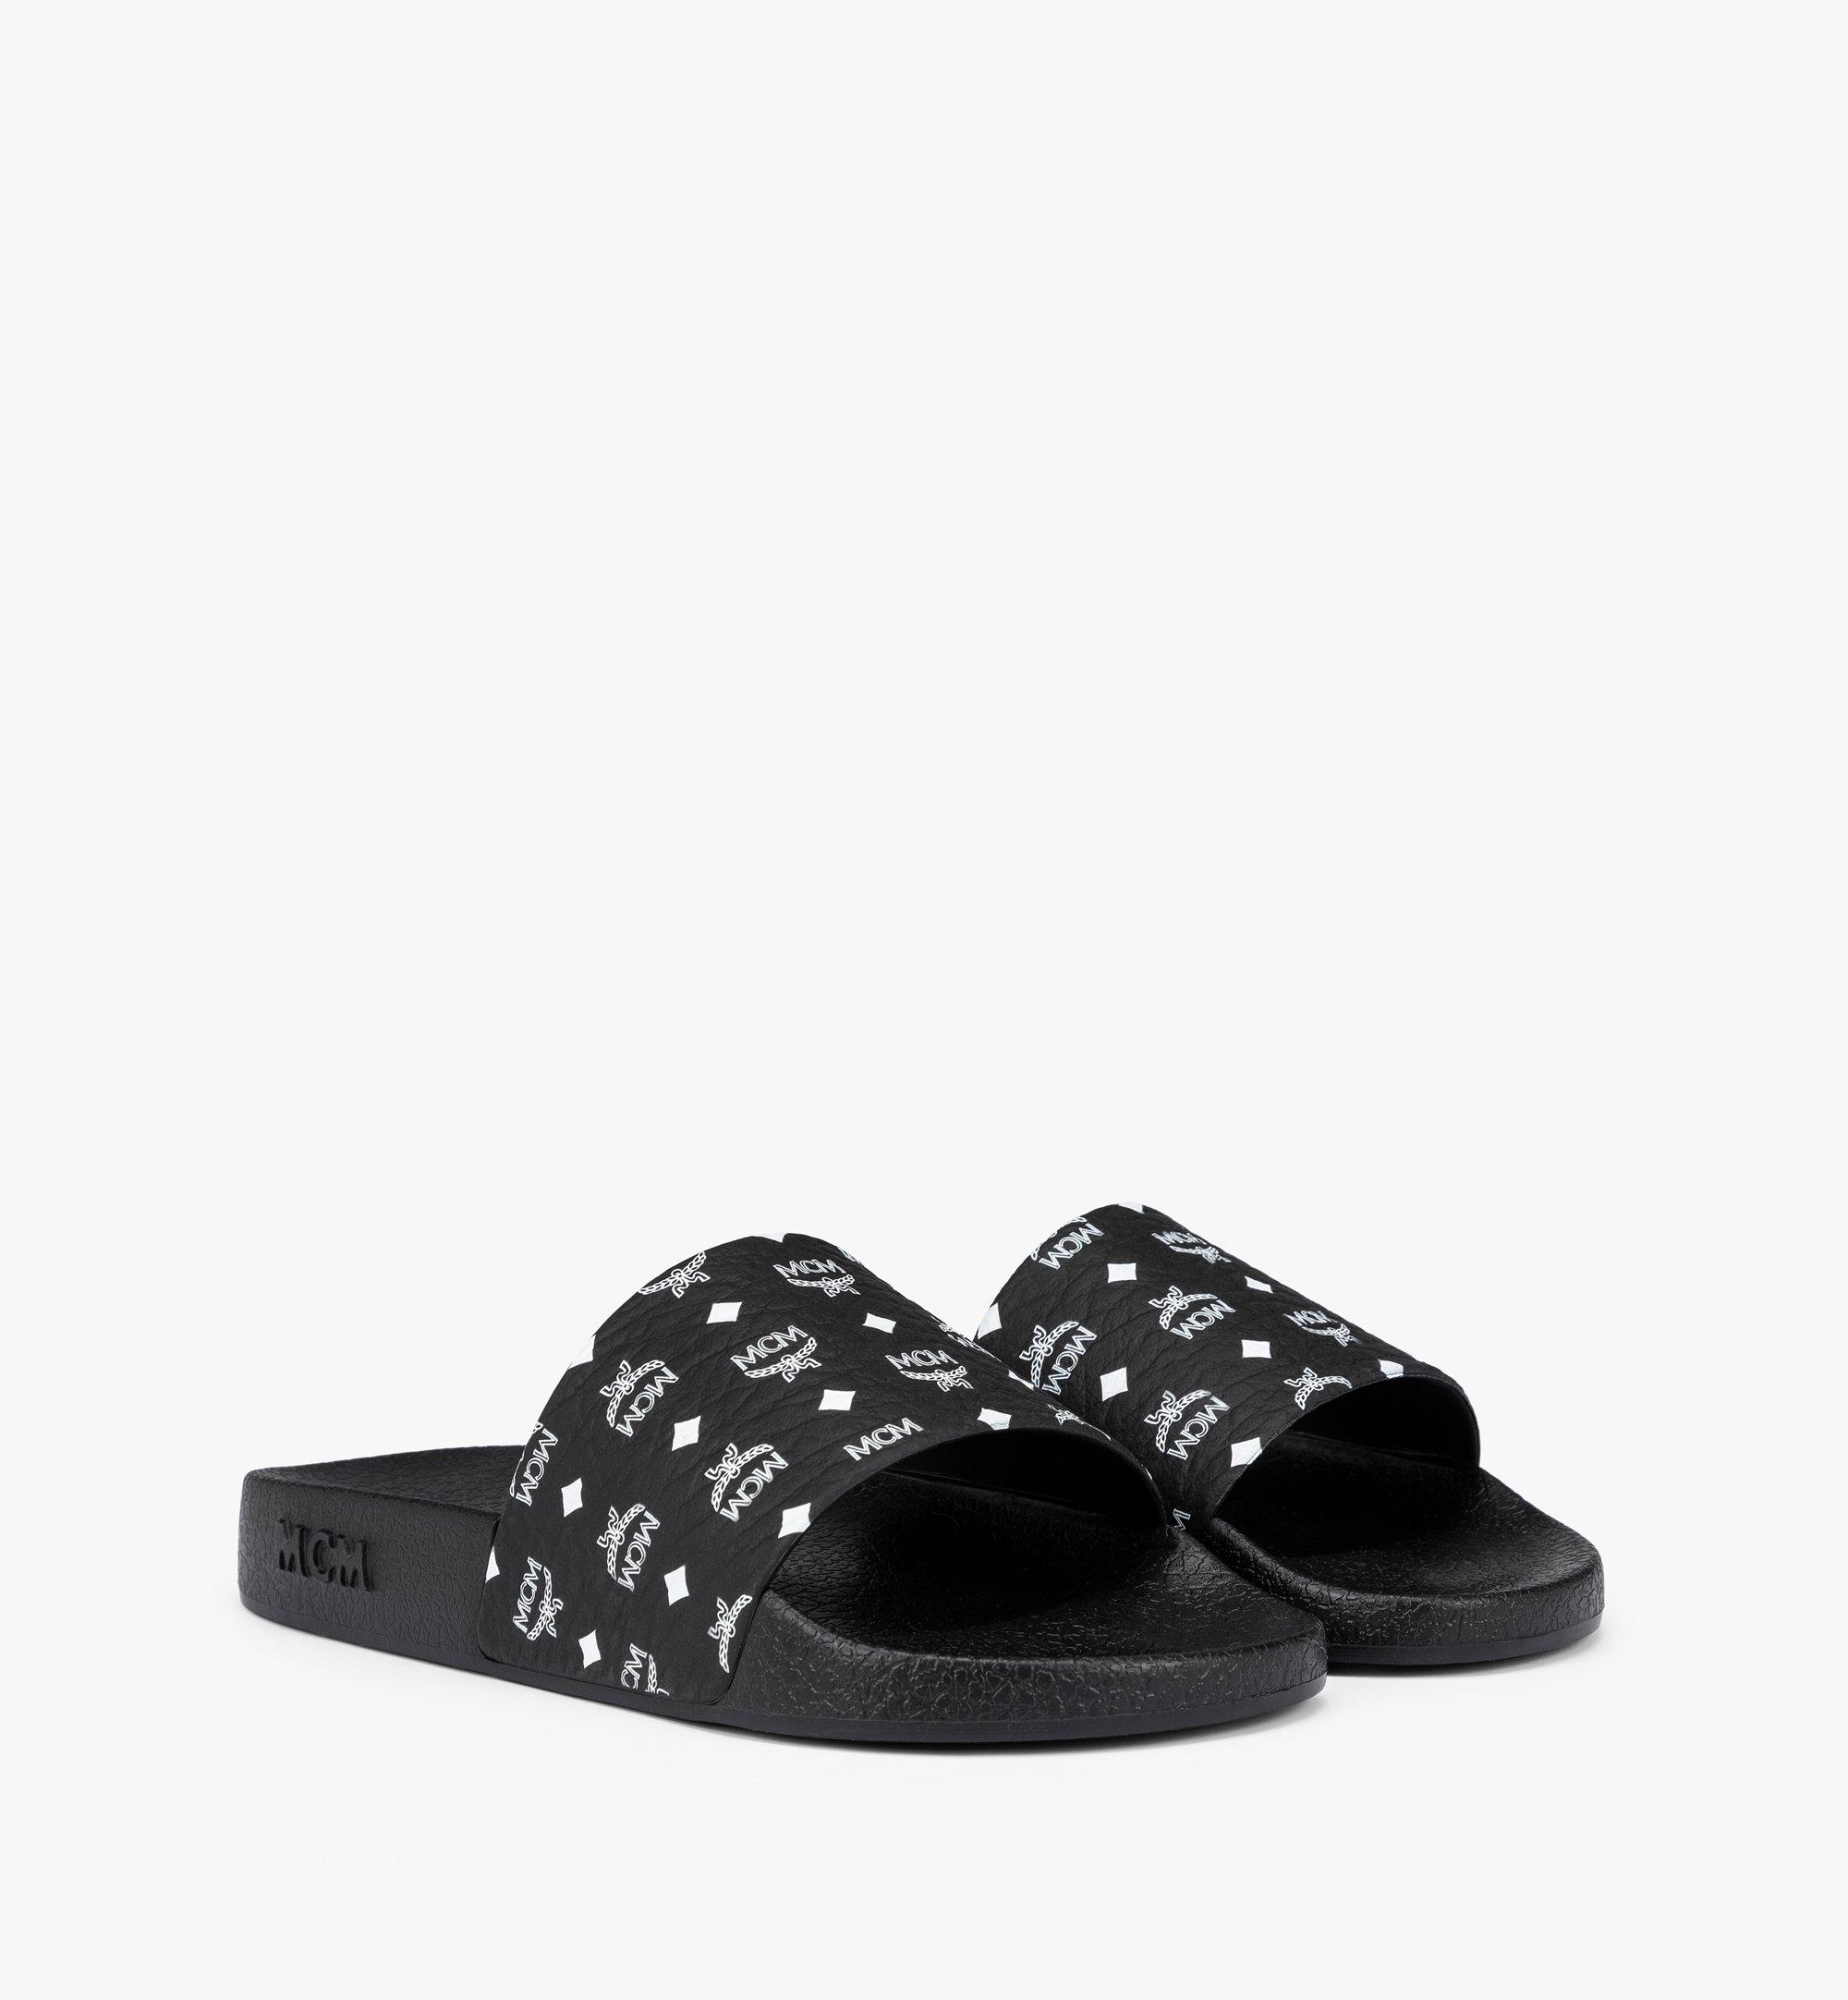 sparx slippers jabong